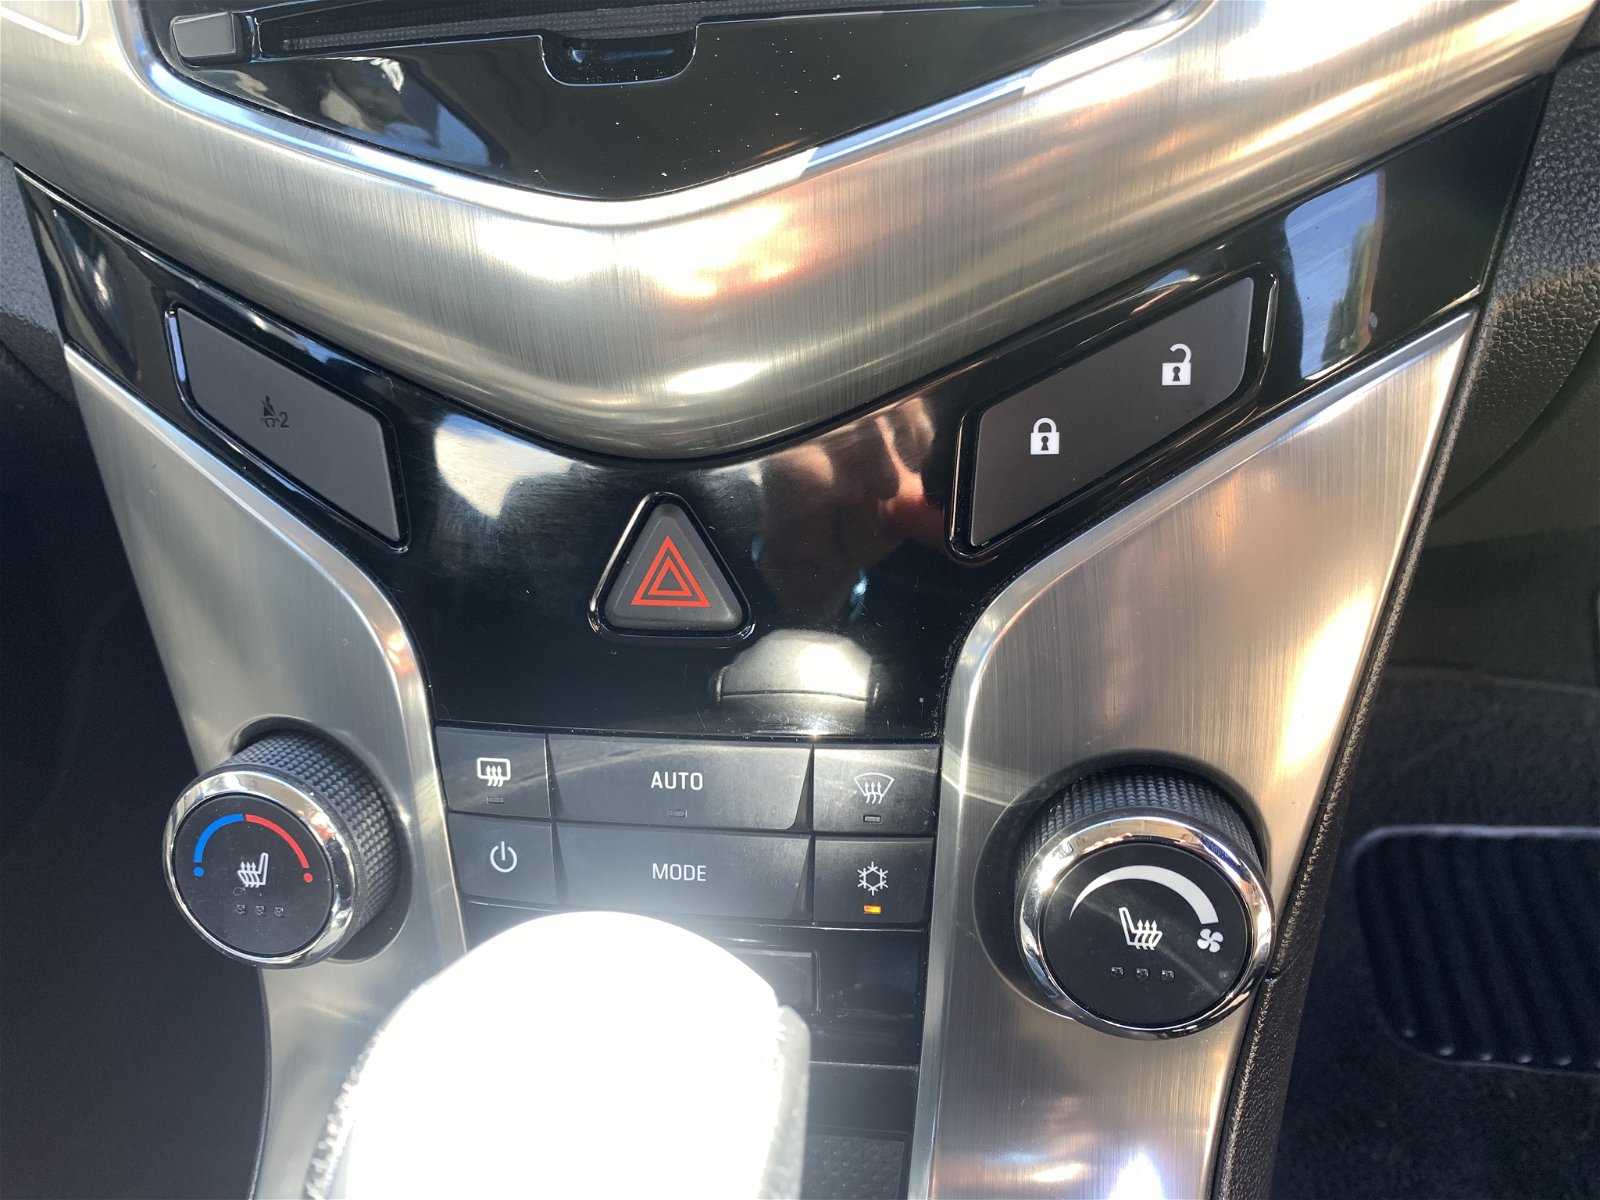 2014 Holden Cruze Z-series 1.8p/6at/sl